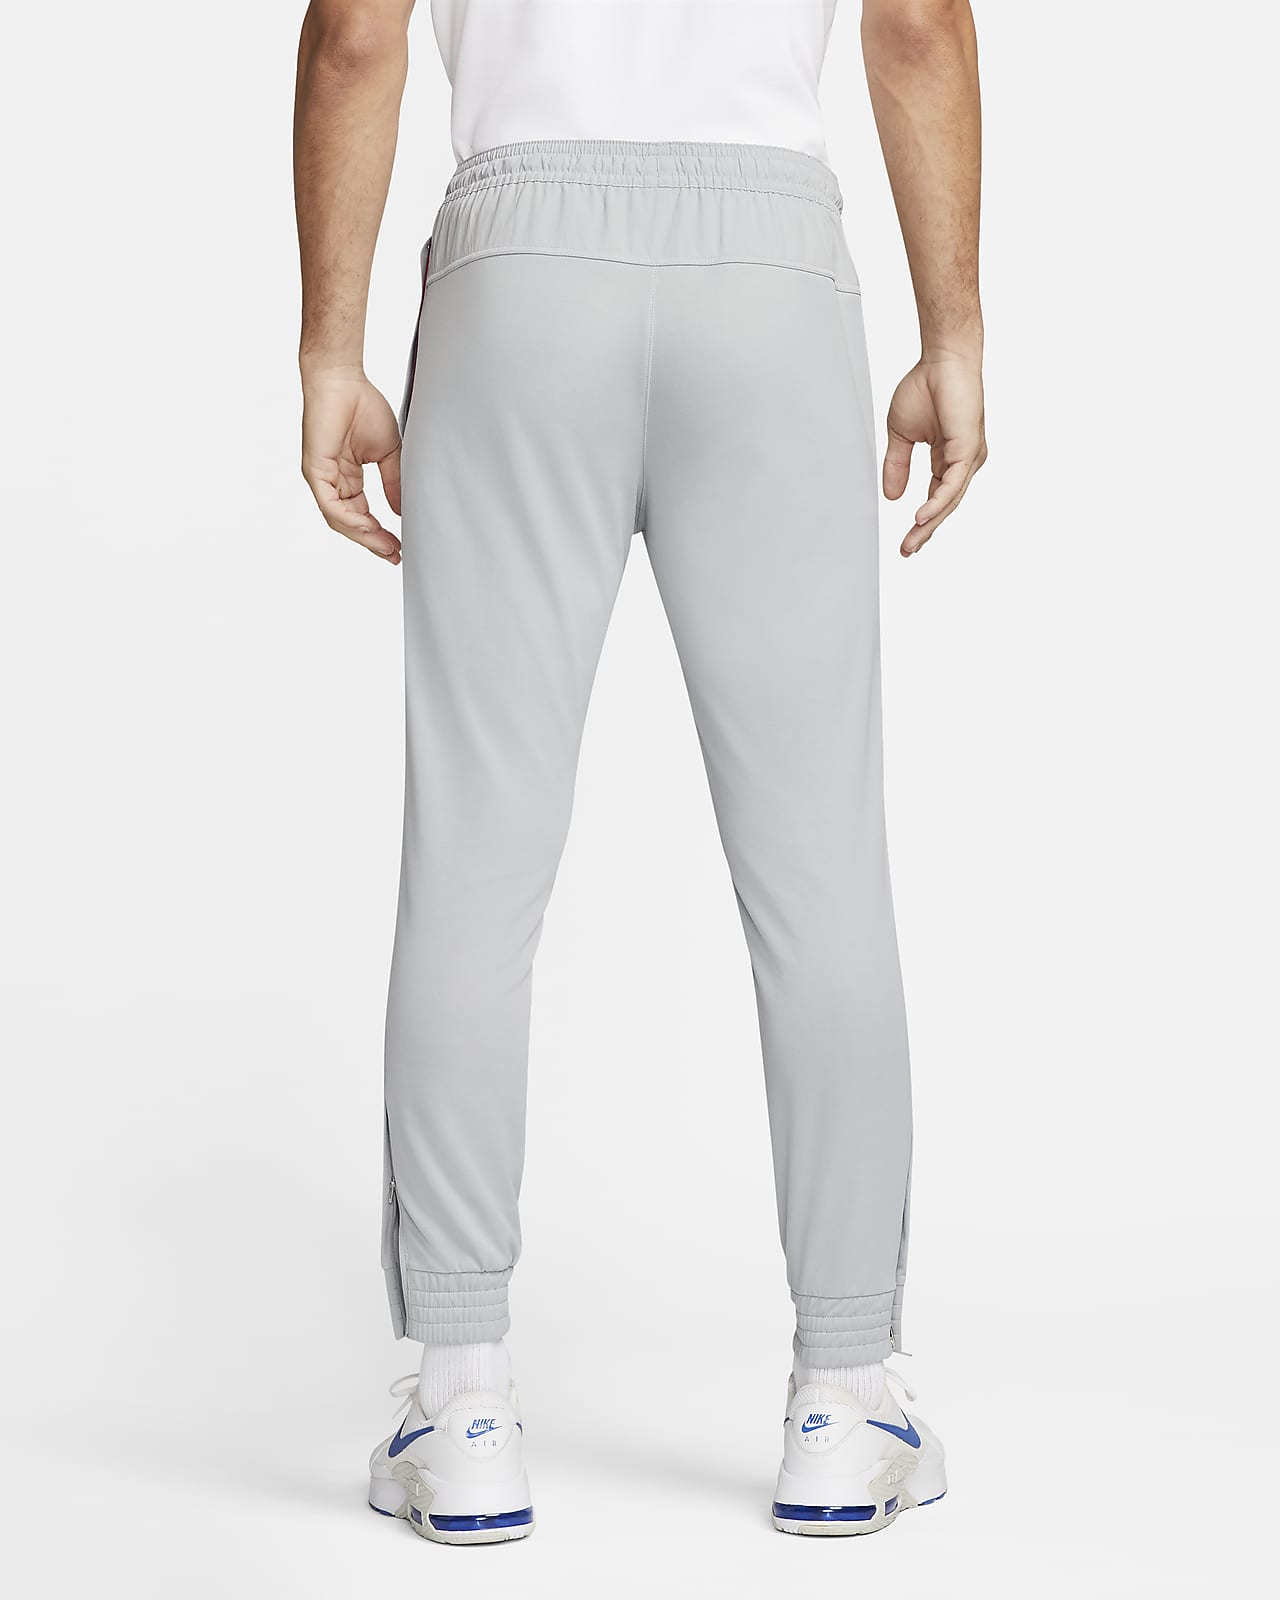 U.S. Knit Soccer Pants. Nike.com